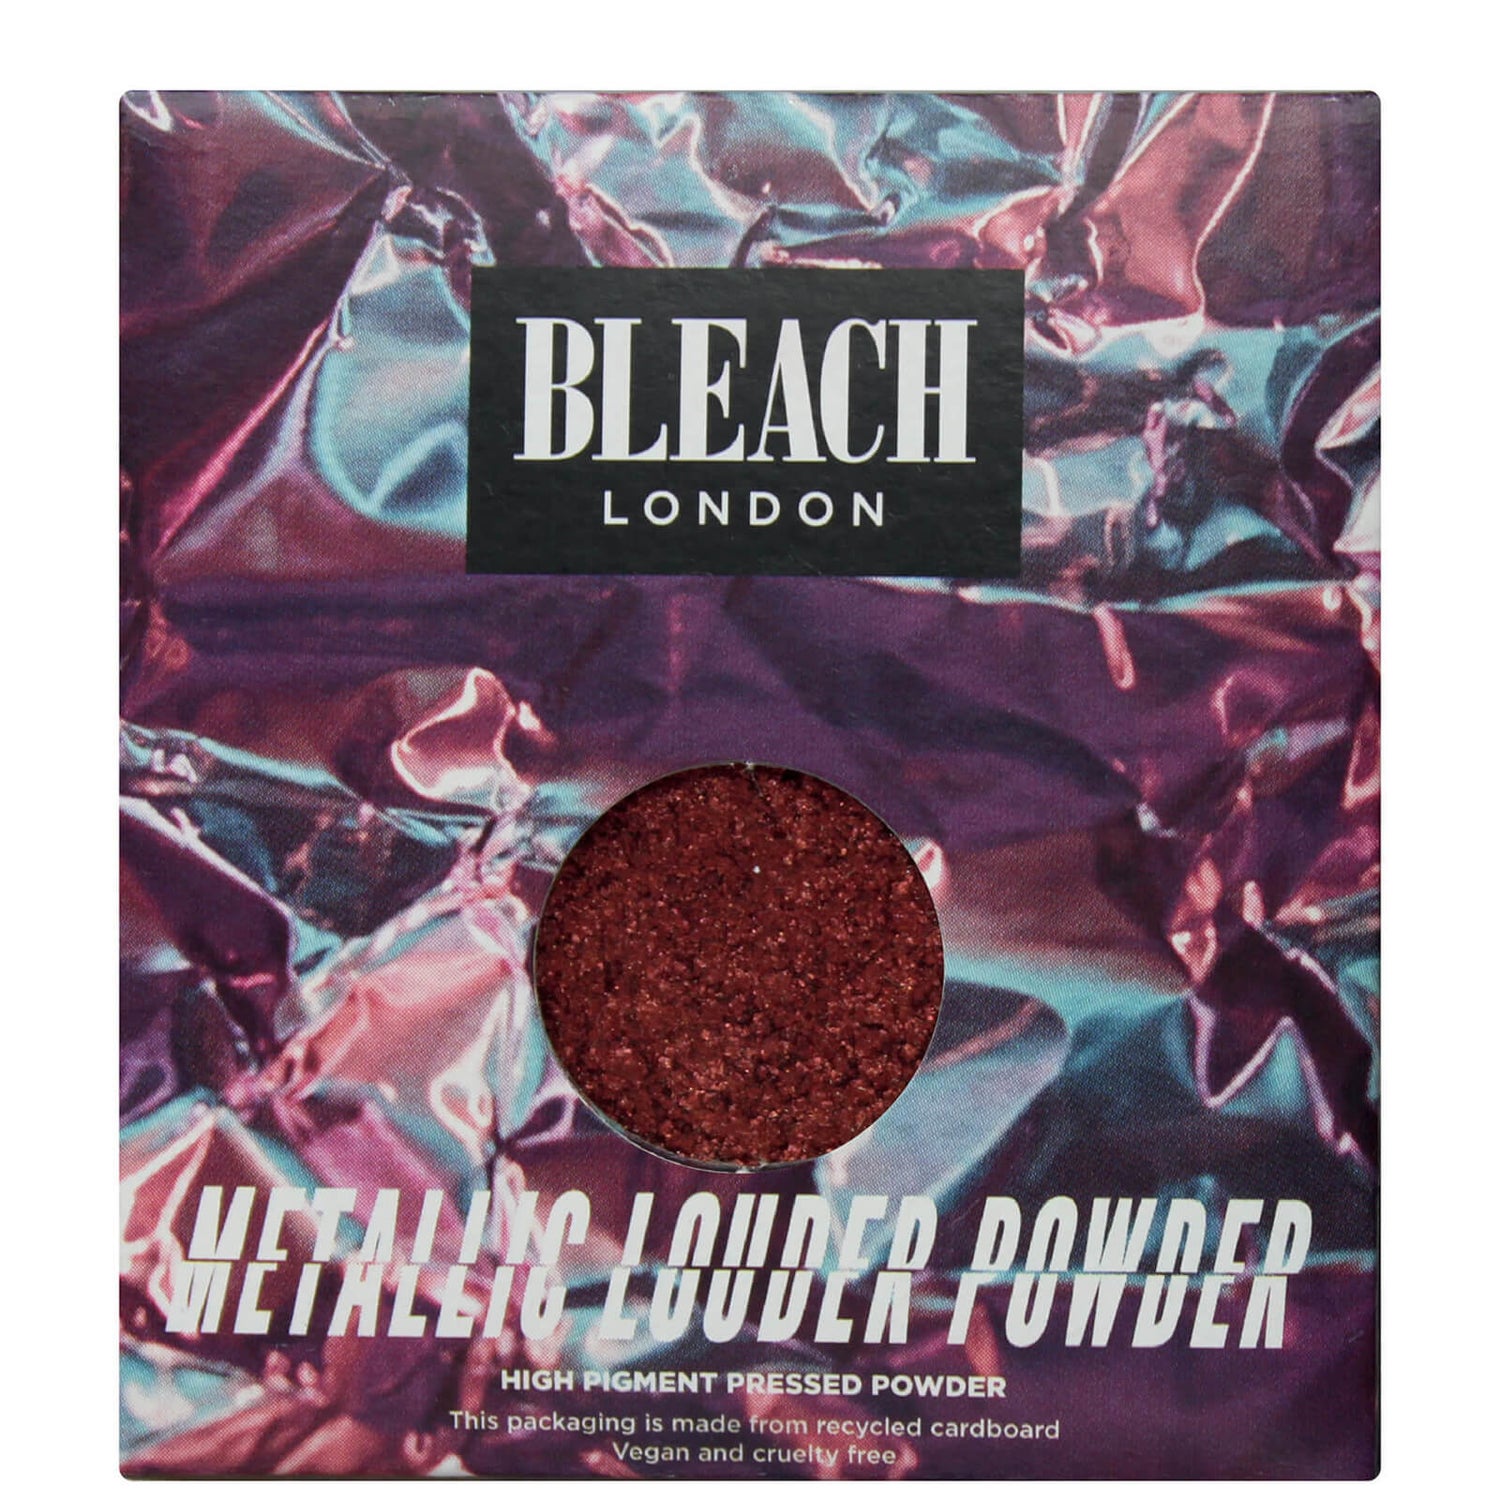 BLEACH LONDON Metallic Louder Powder Isr 4 Me(블리치 런던 메탈릭 라우더 파우더 Isr 4 Me)